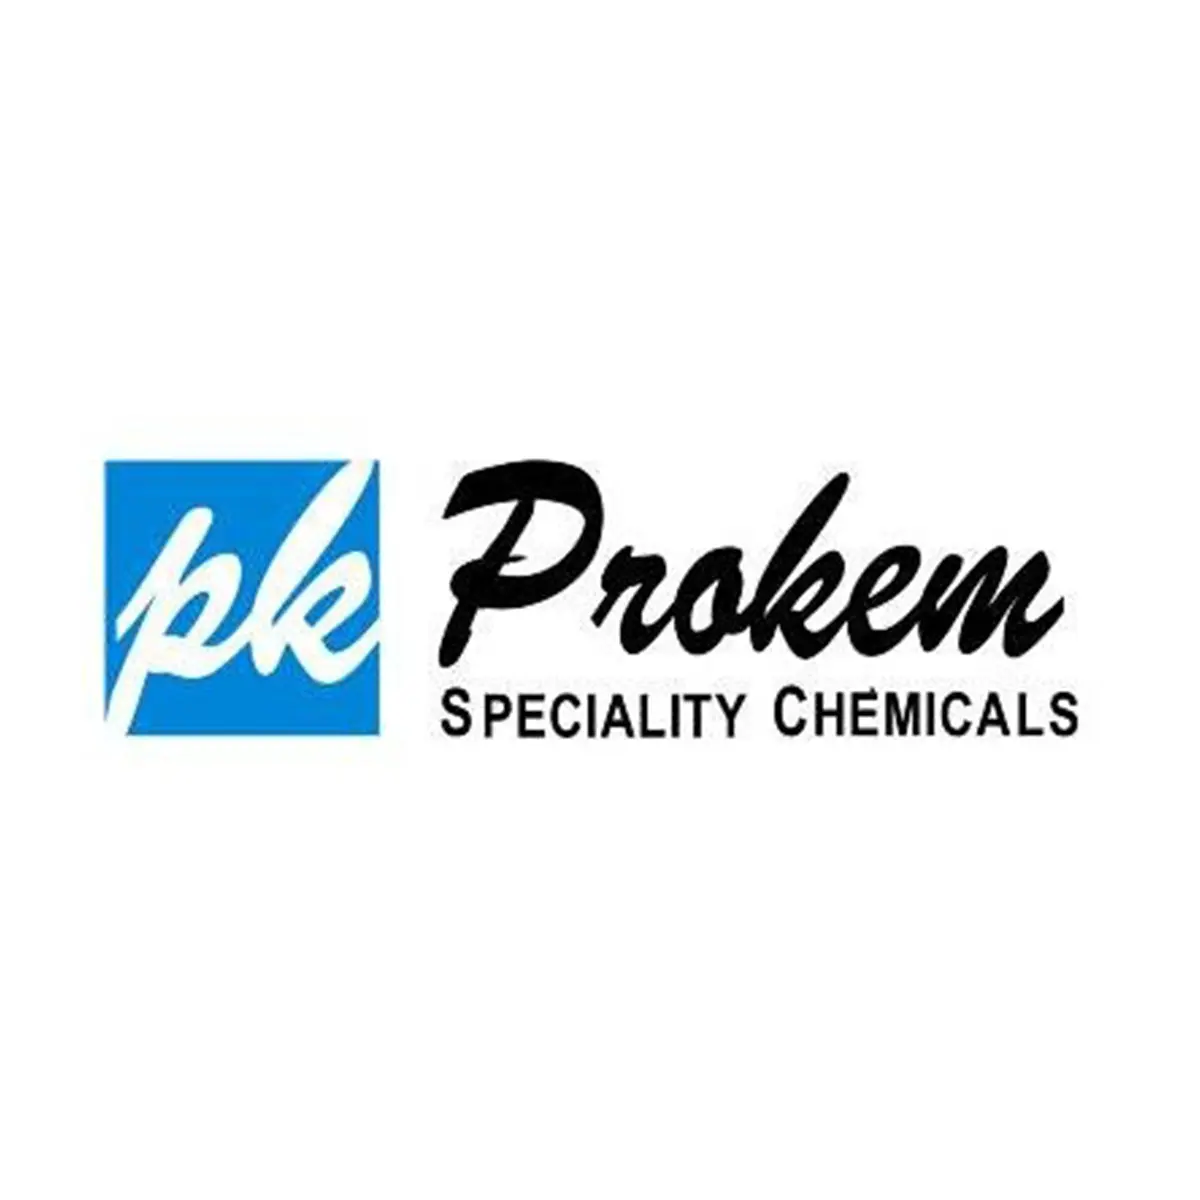 prakem specialty chemicals logo